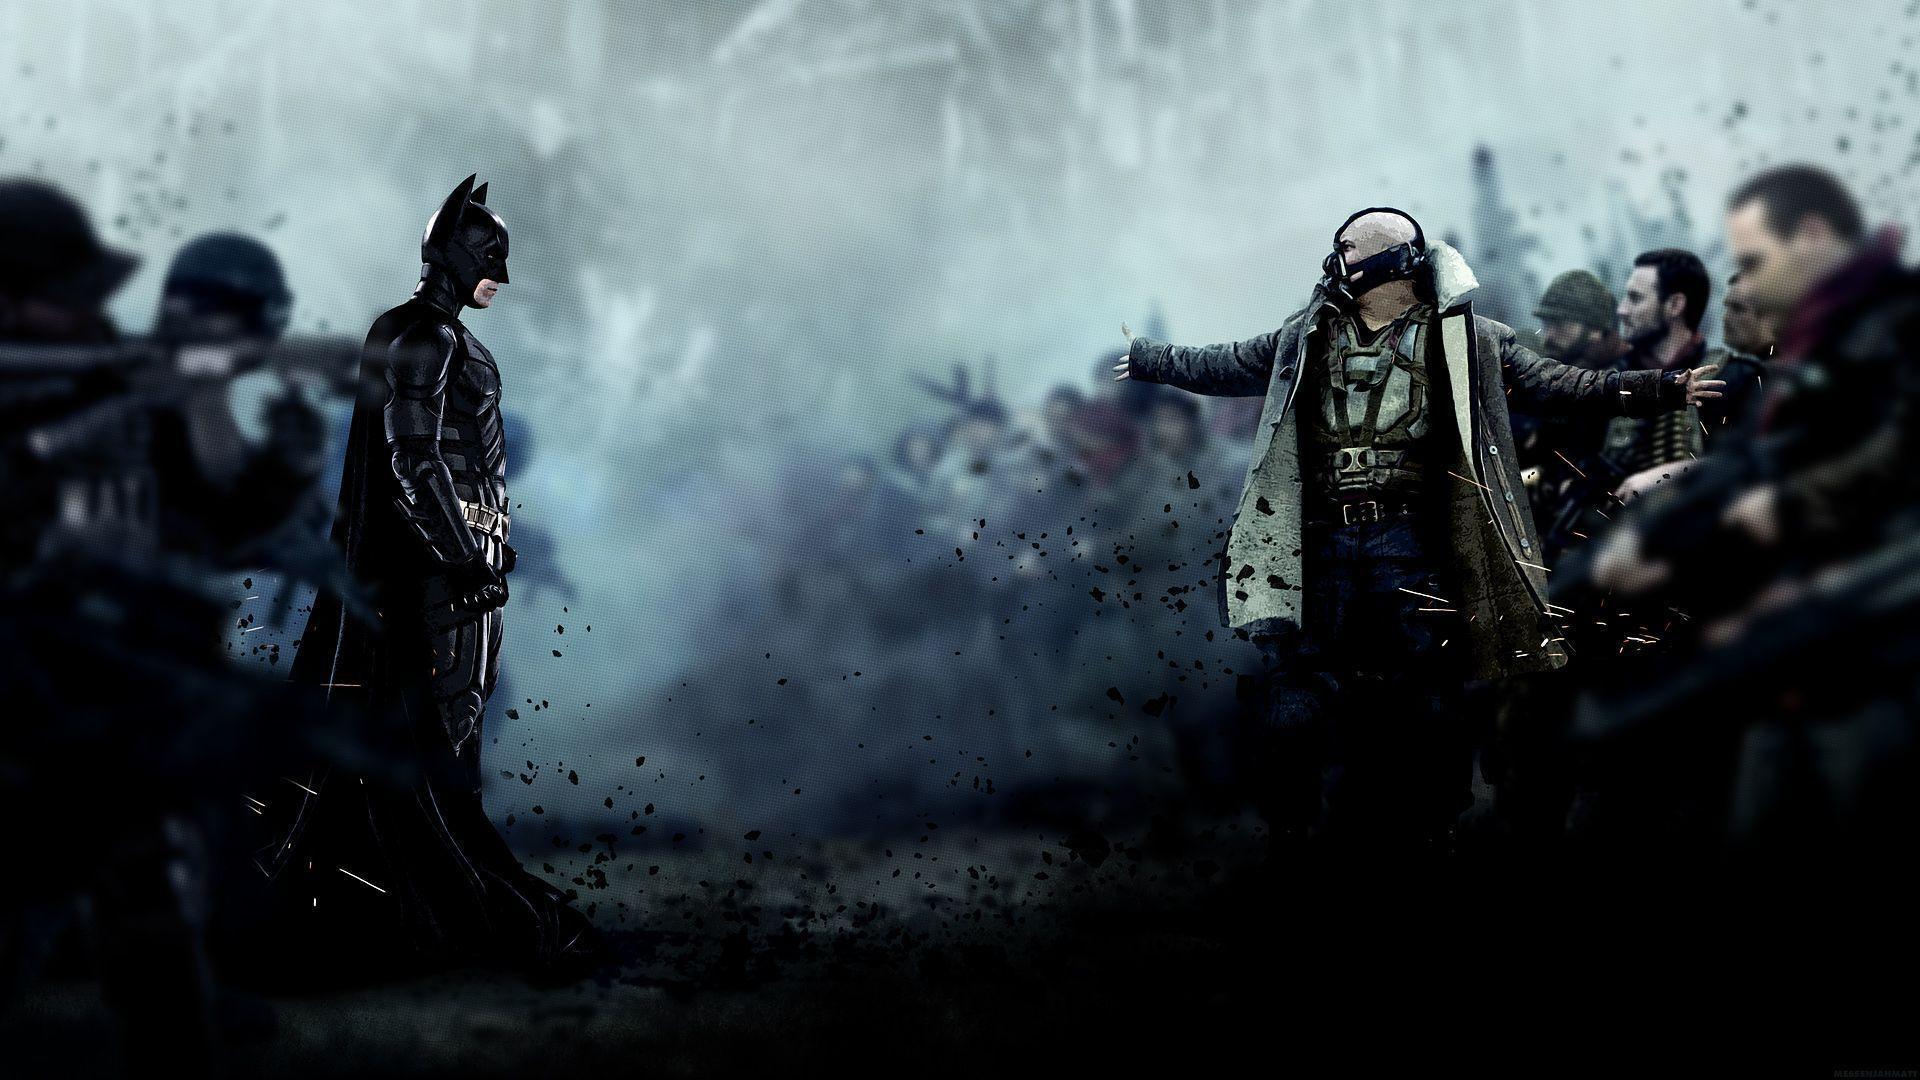 image For > The Dark Knight Rises Wallpaper HD 1920x1080